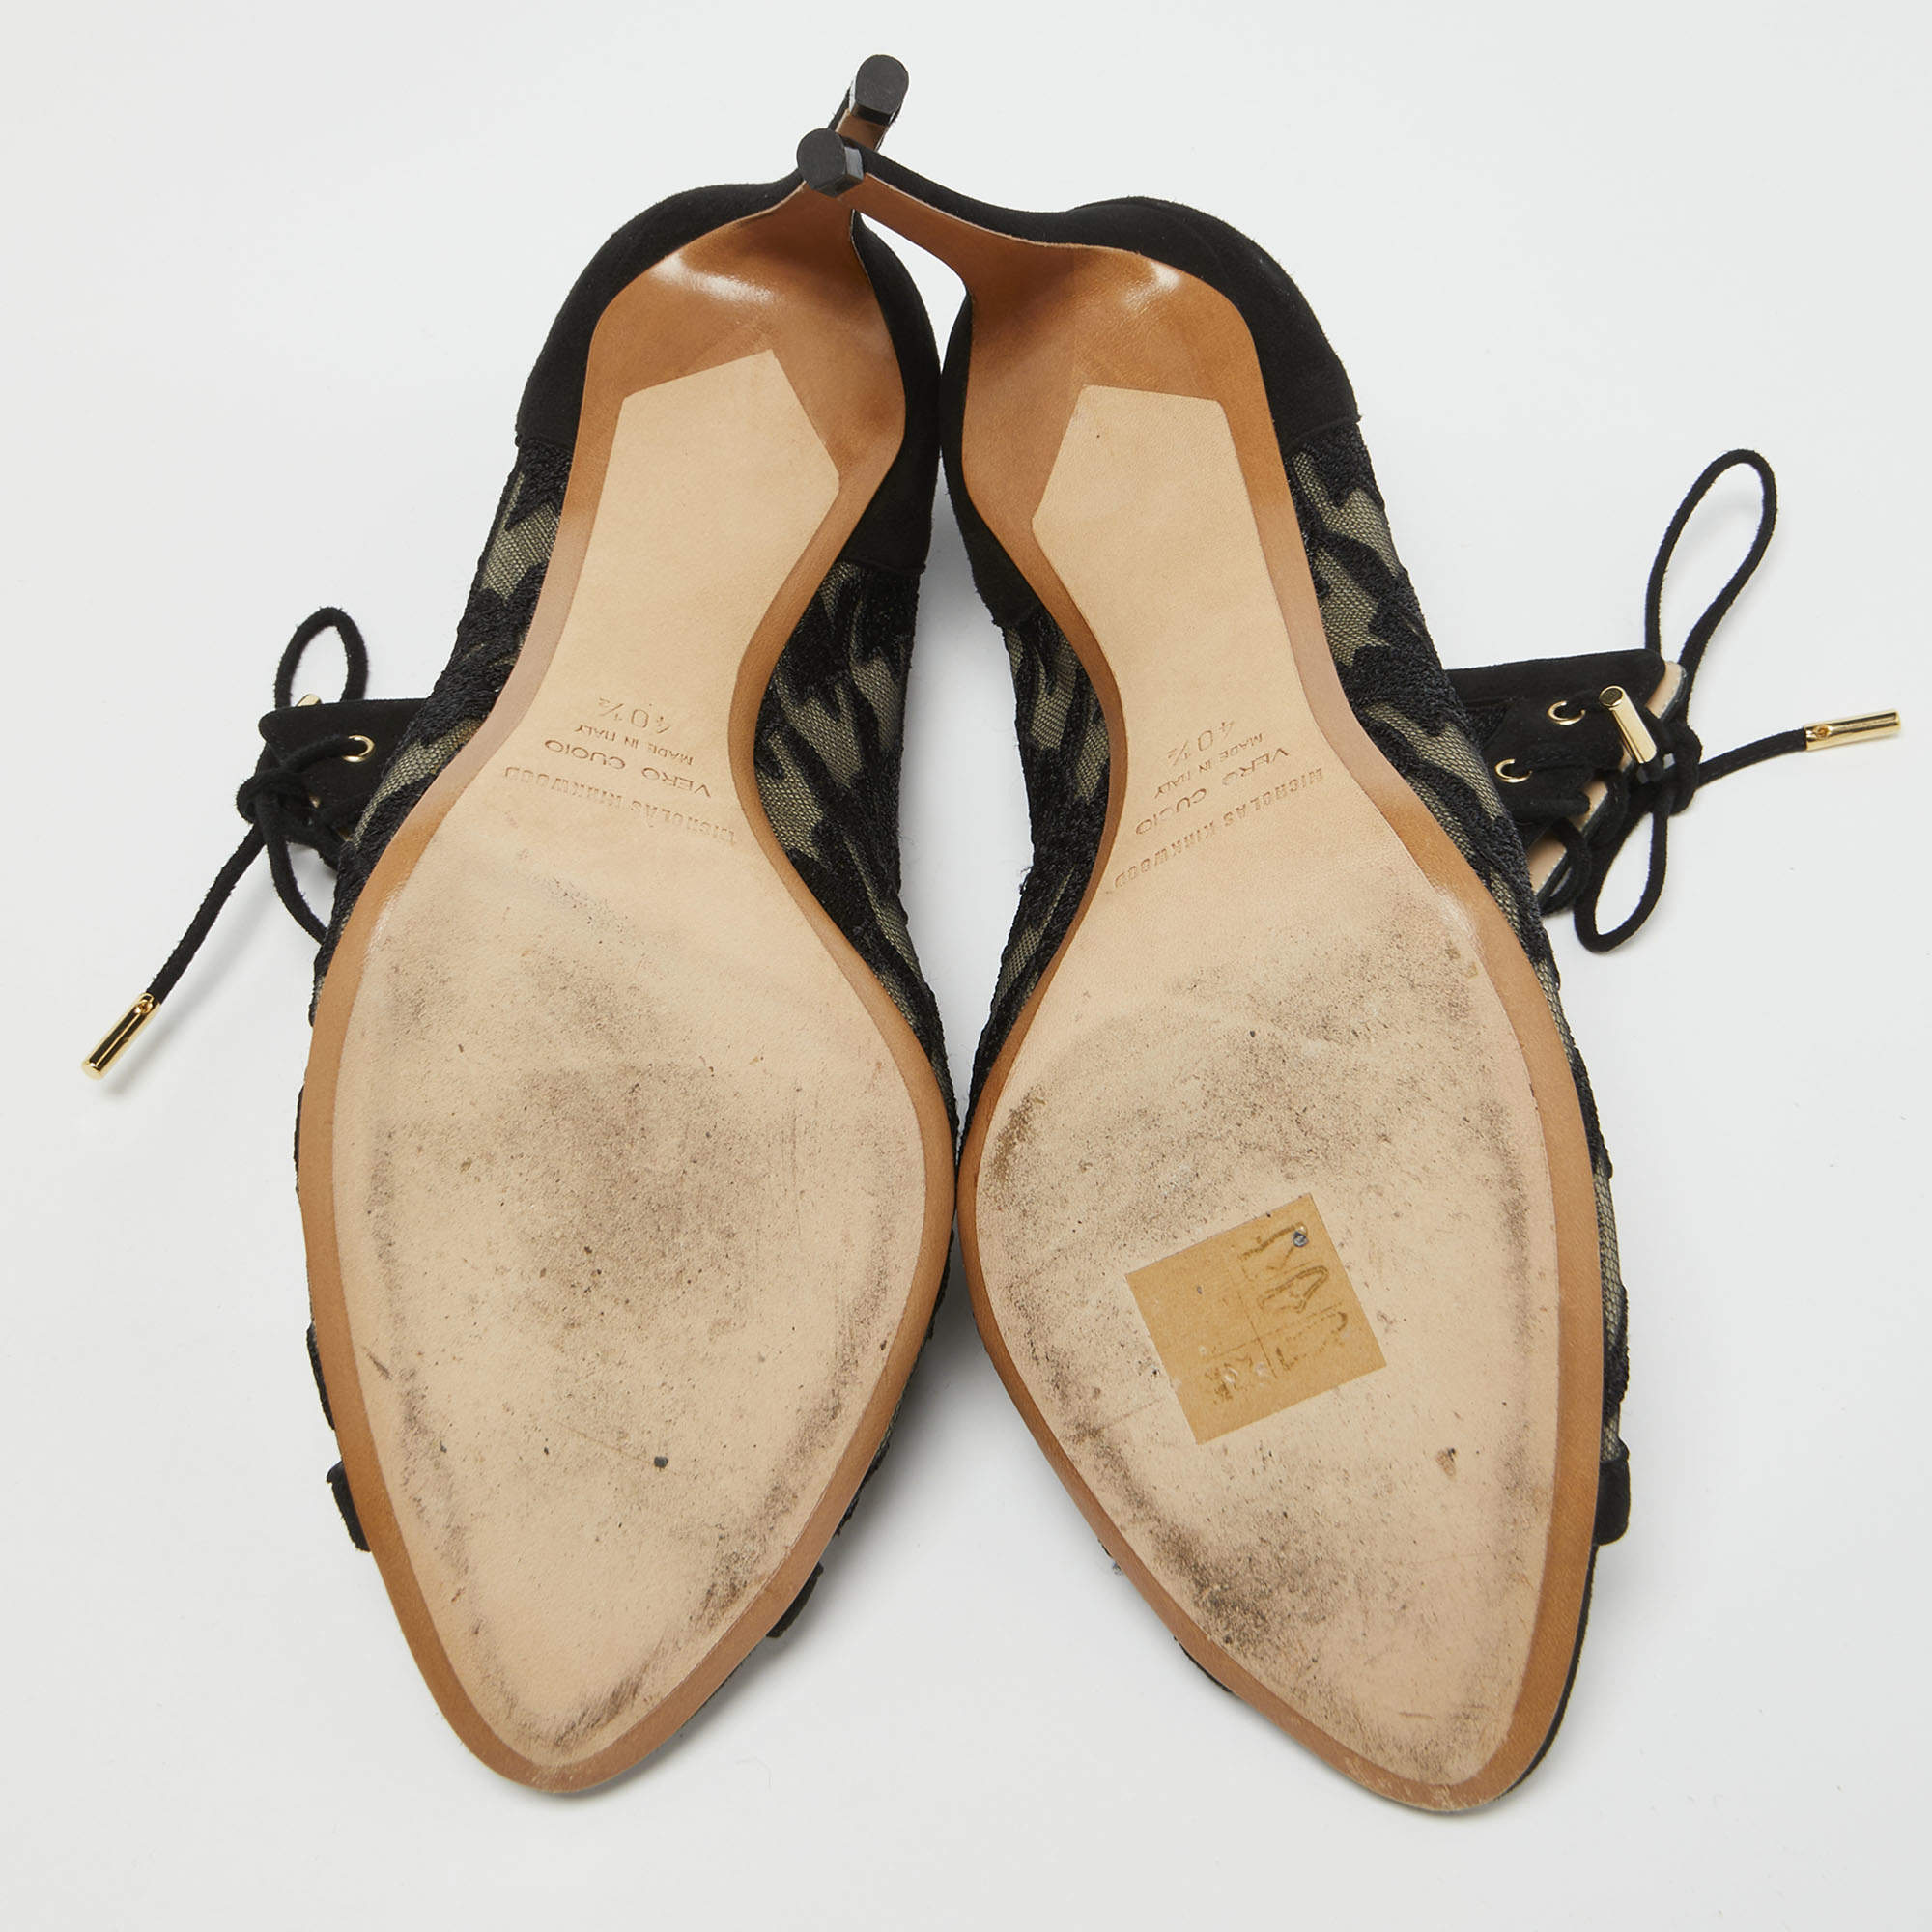 Nicholas Kirkwood Women'S 909A59Nl11N99 Black Leather Sandals